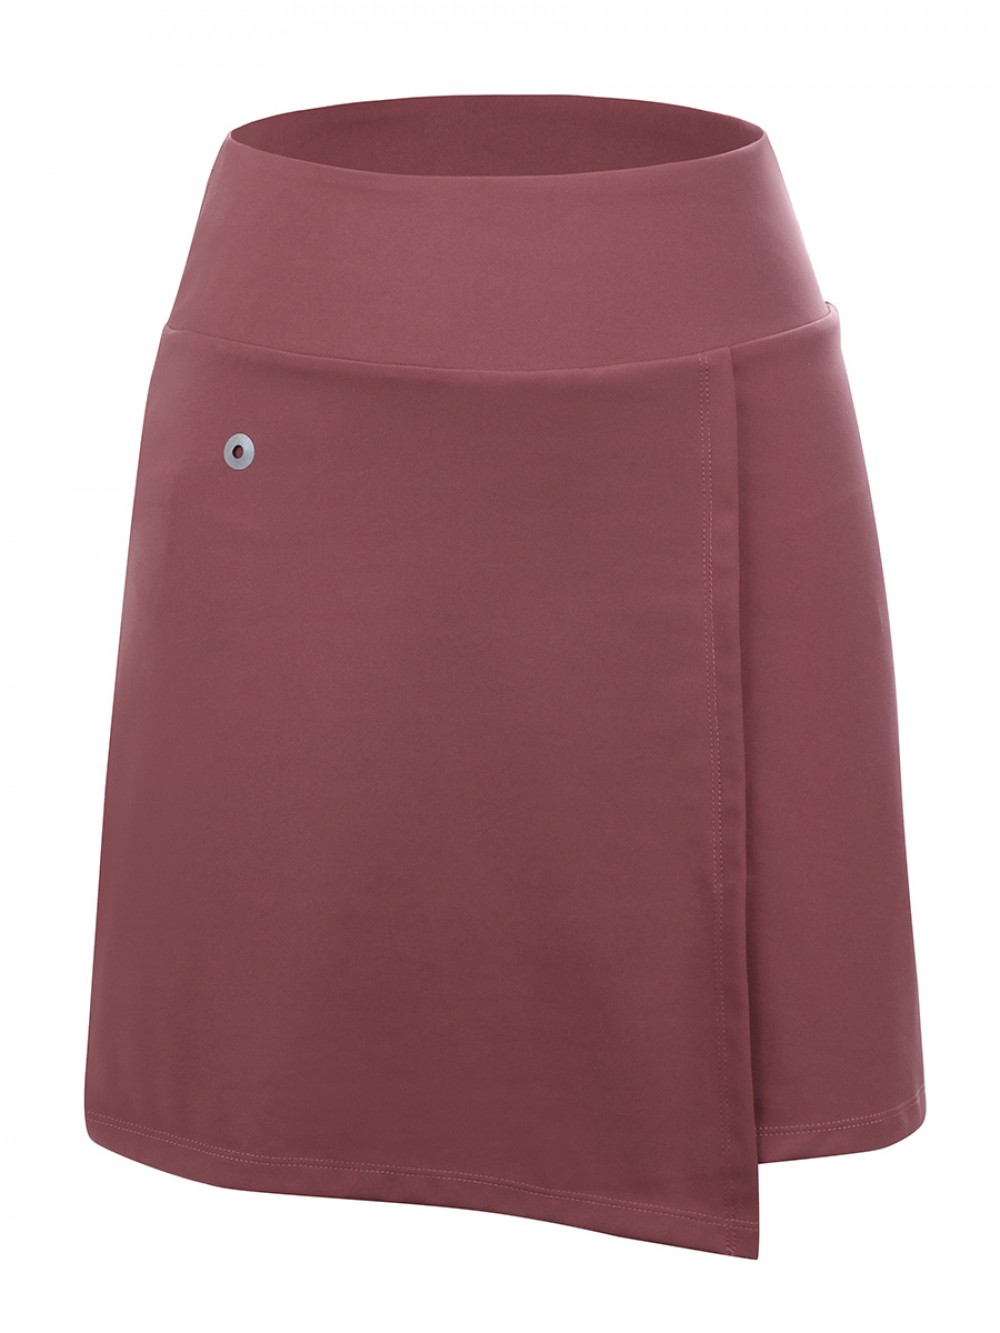 Cheeky Wine Red Headphone Hole Tennis Skirt High Rise